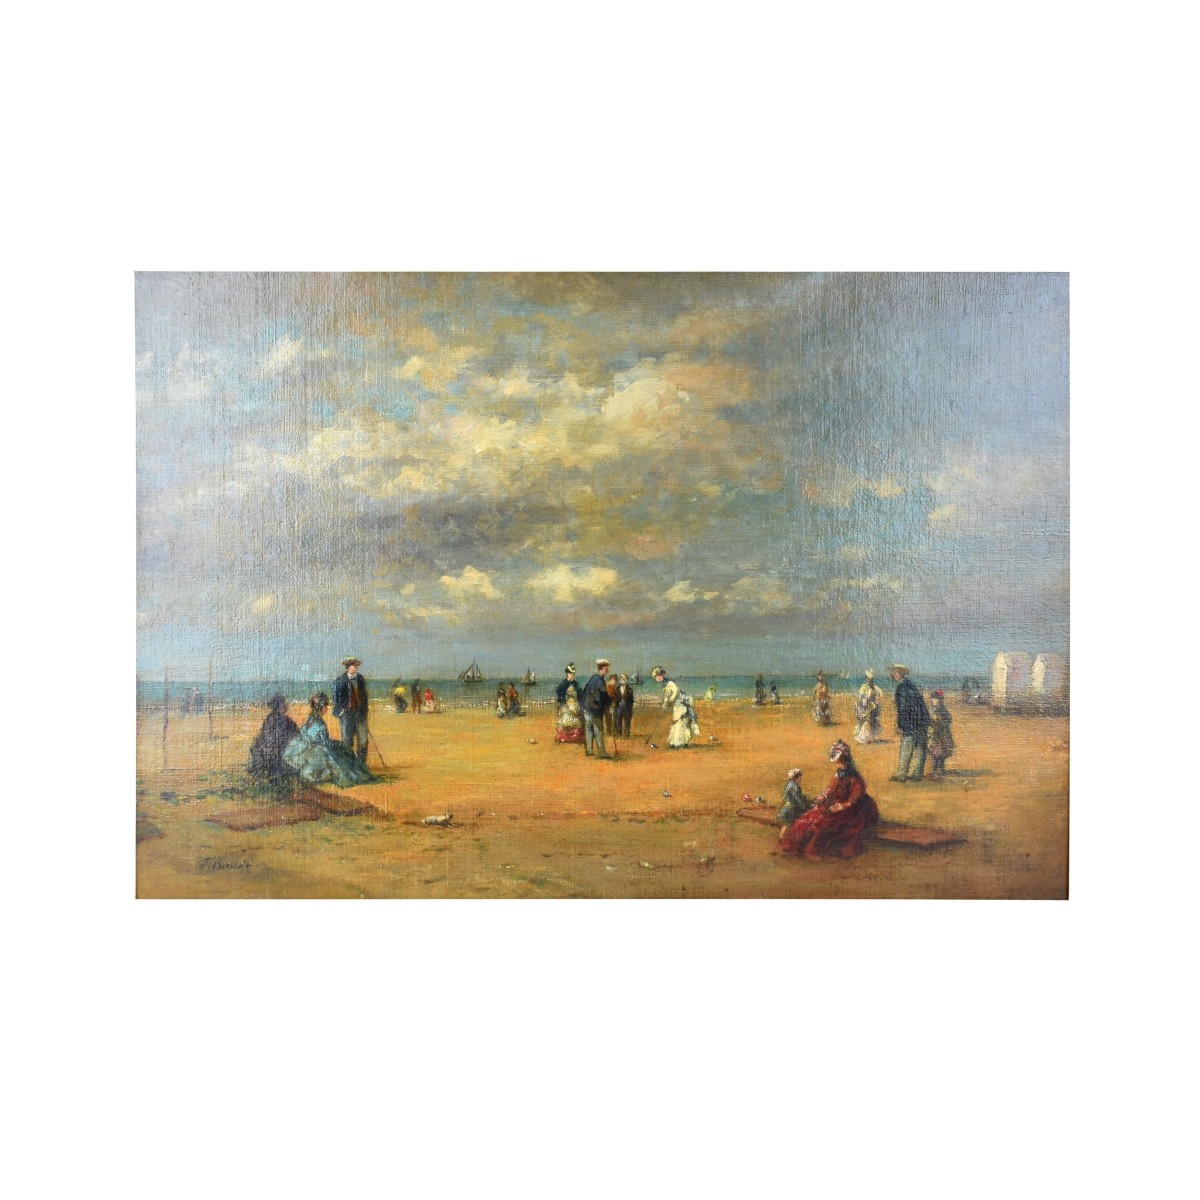 Eug-ne Baudin, French (1843 - 1907) Oil on Canvas